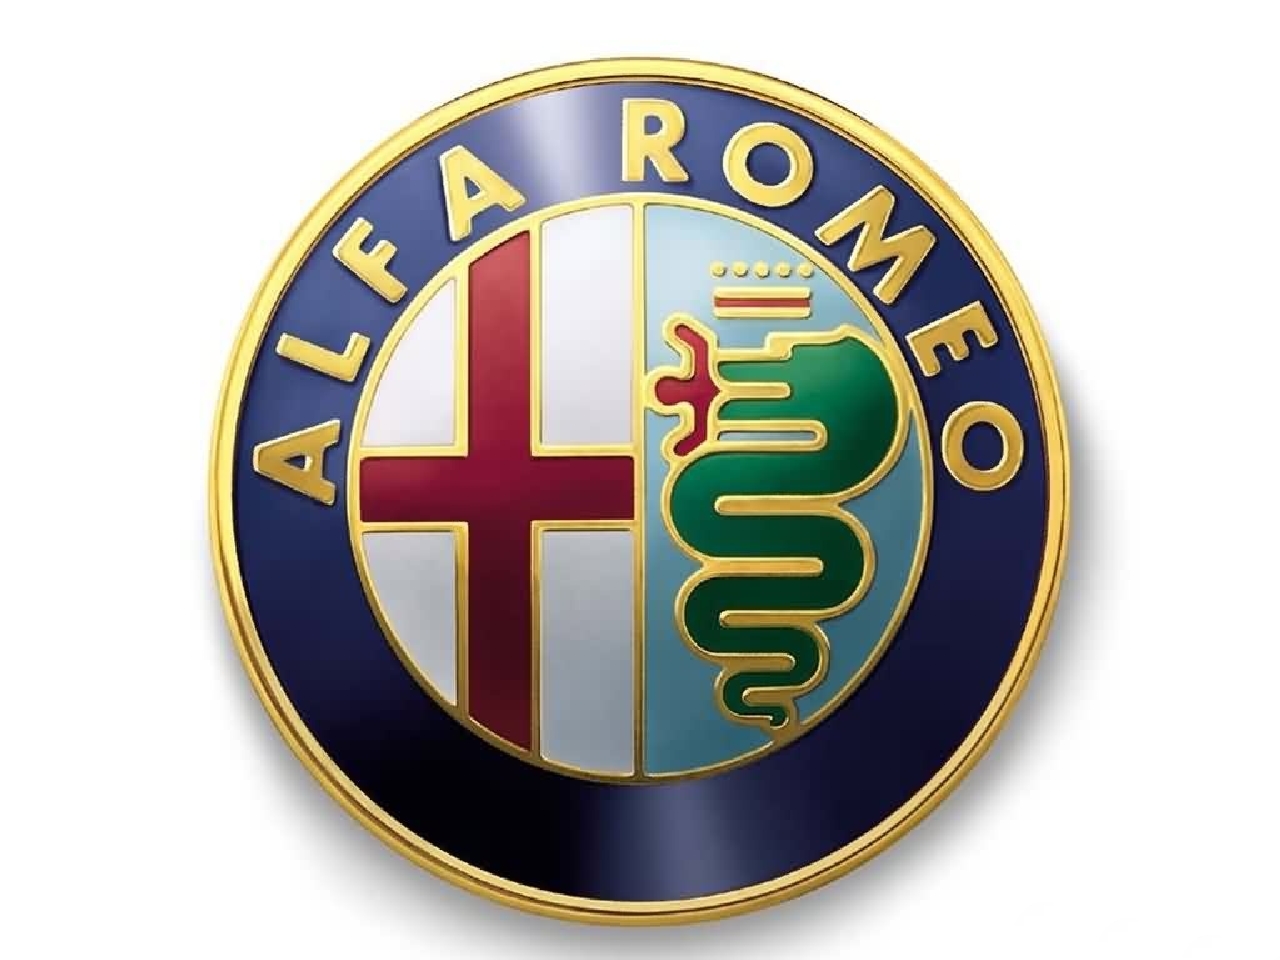 Alfa Romeo Picture